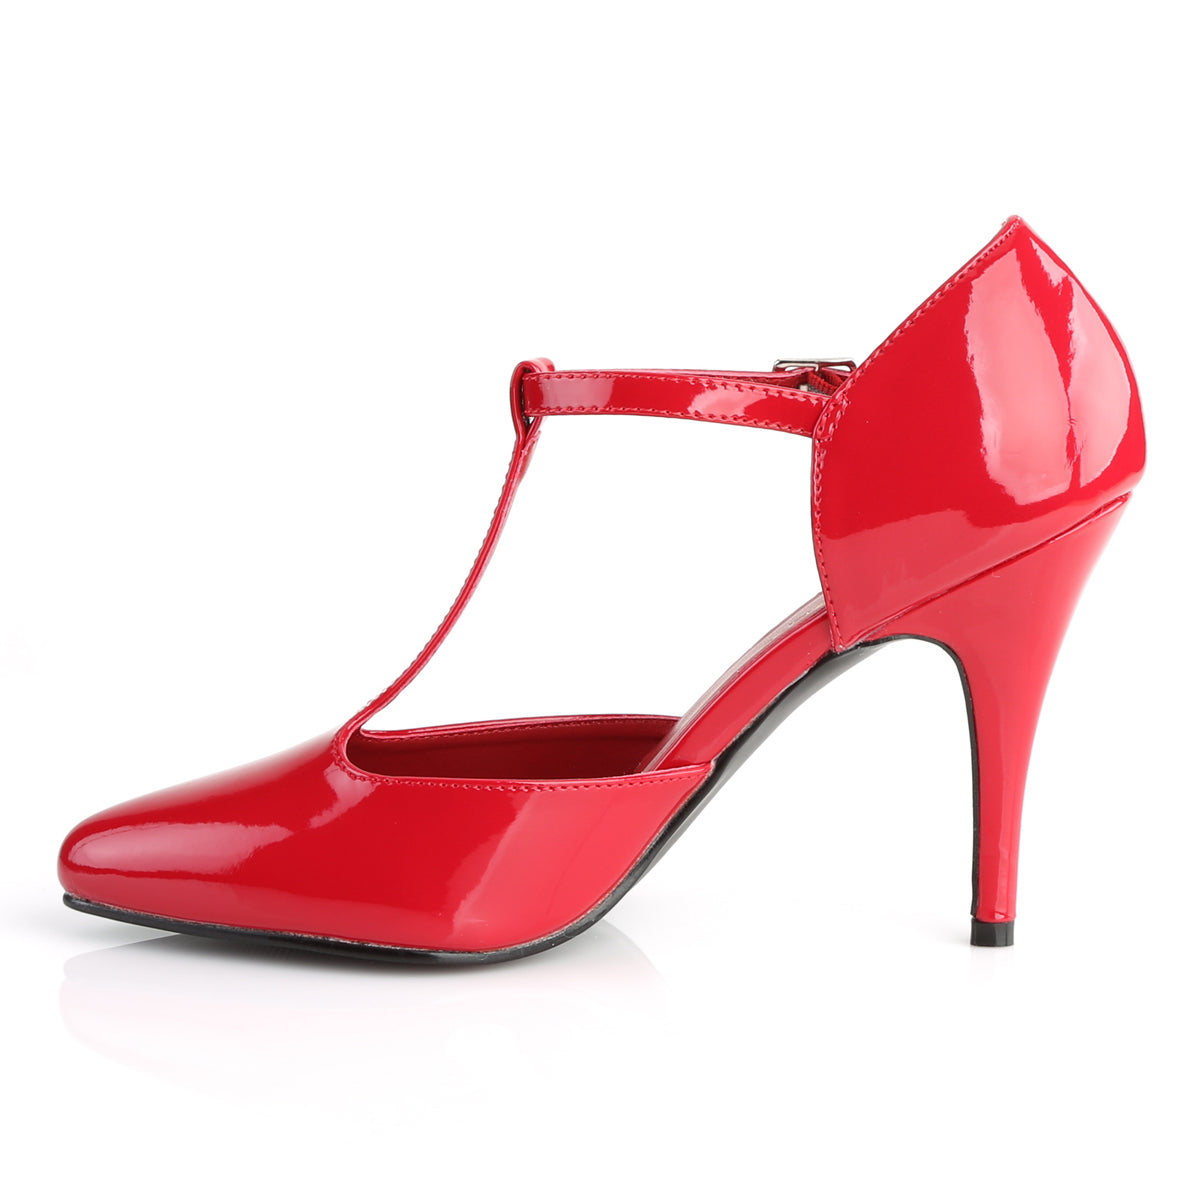 VANITY-415 Pleaser Shoes 4 Inch Heel Red Fetish Footwear-Pleaser- Sexy Shoes Pole Dance Heels